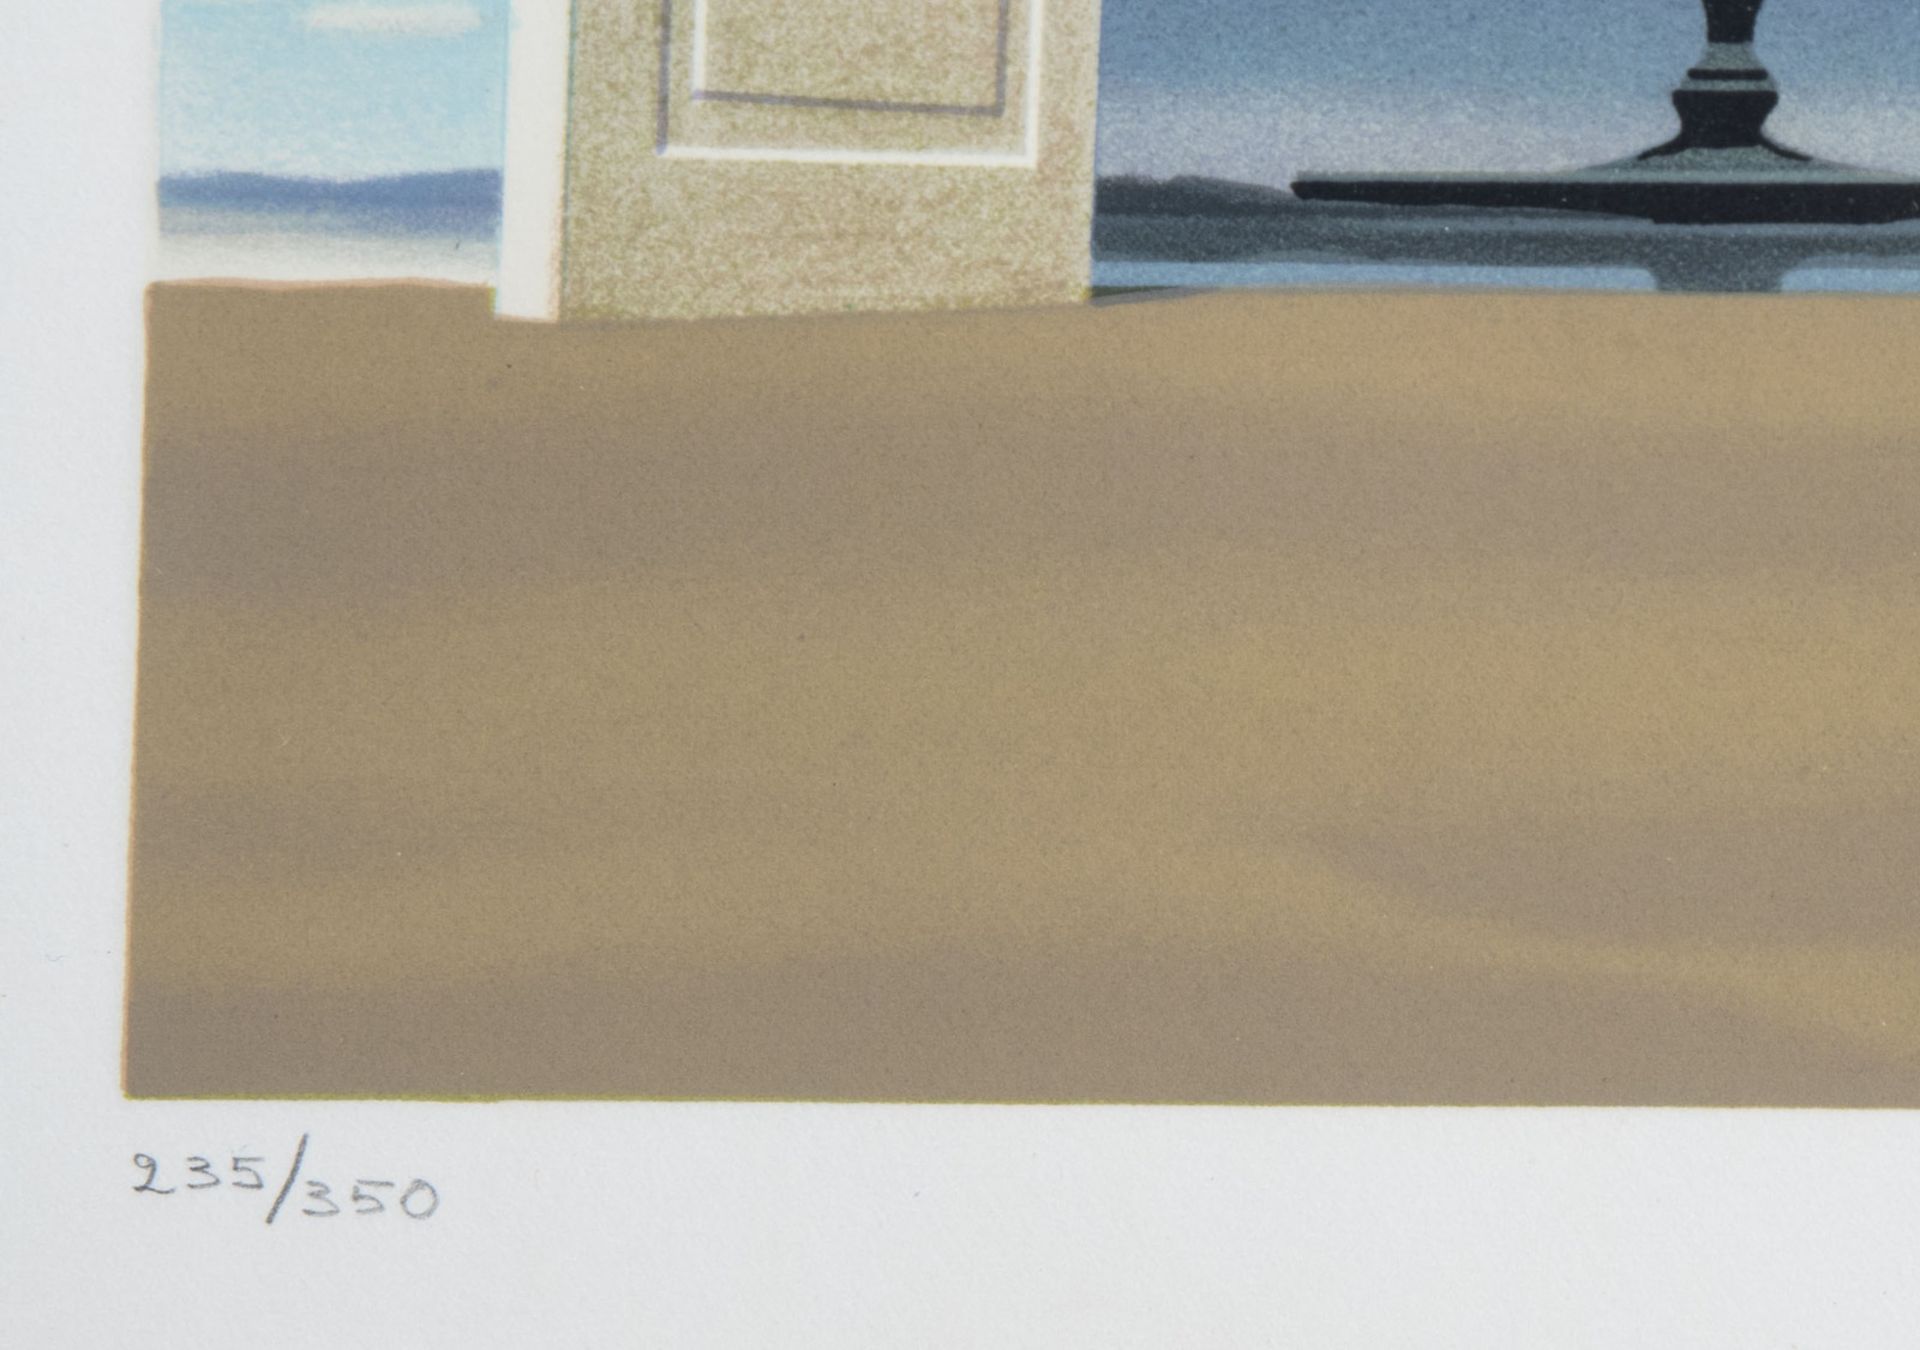 RenŽ Magritte (1898-1967, after):Ê 'Une porte s'ouvre sur...', litho in colours, ed. 235/350, [1968] - Image 4 of 7